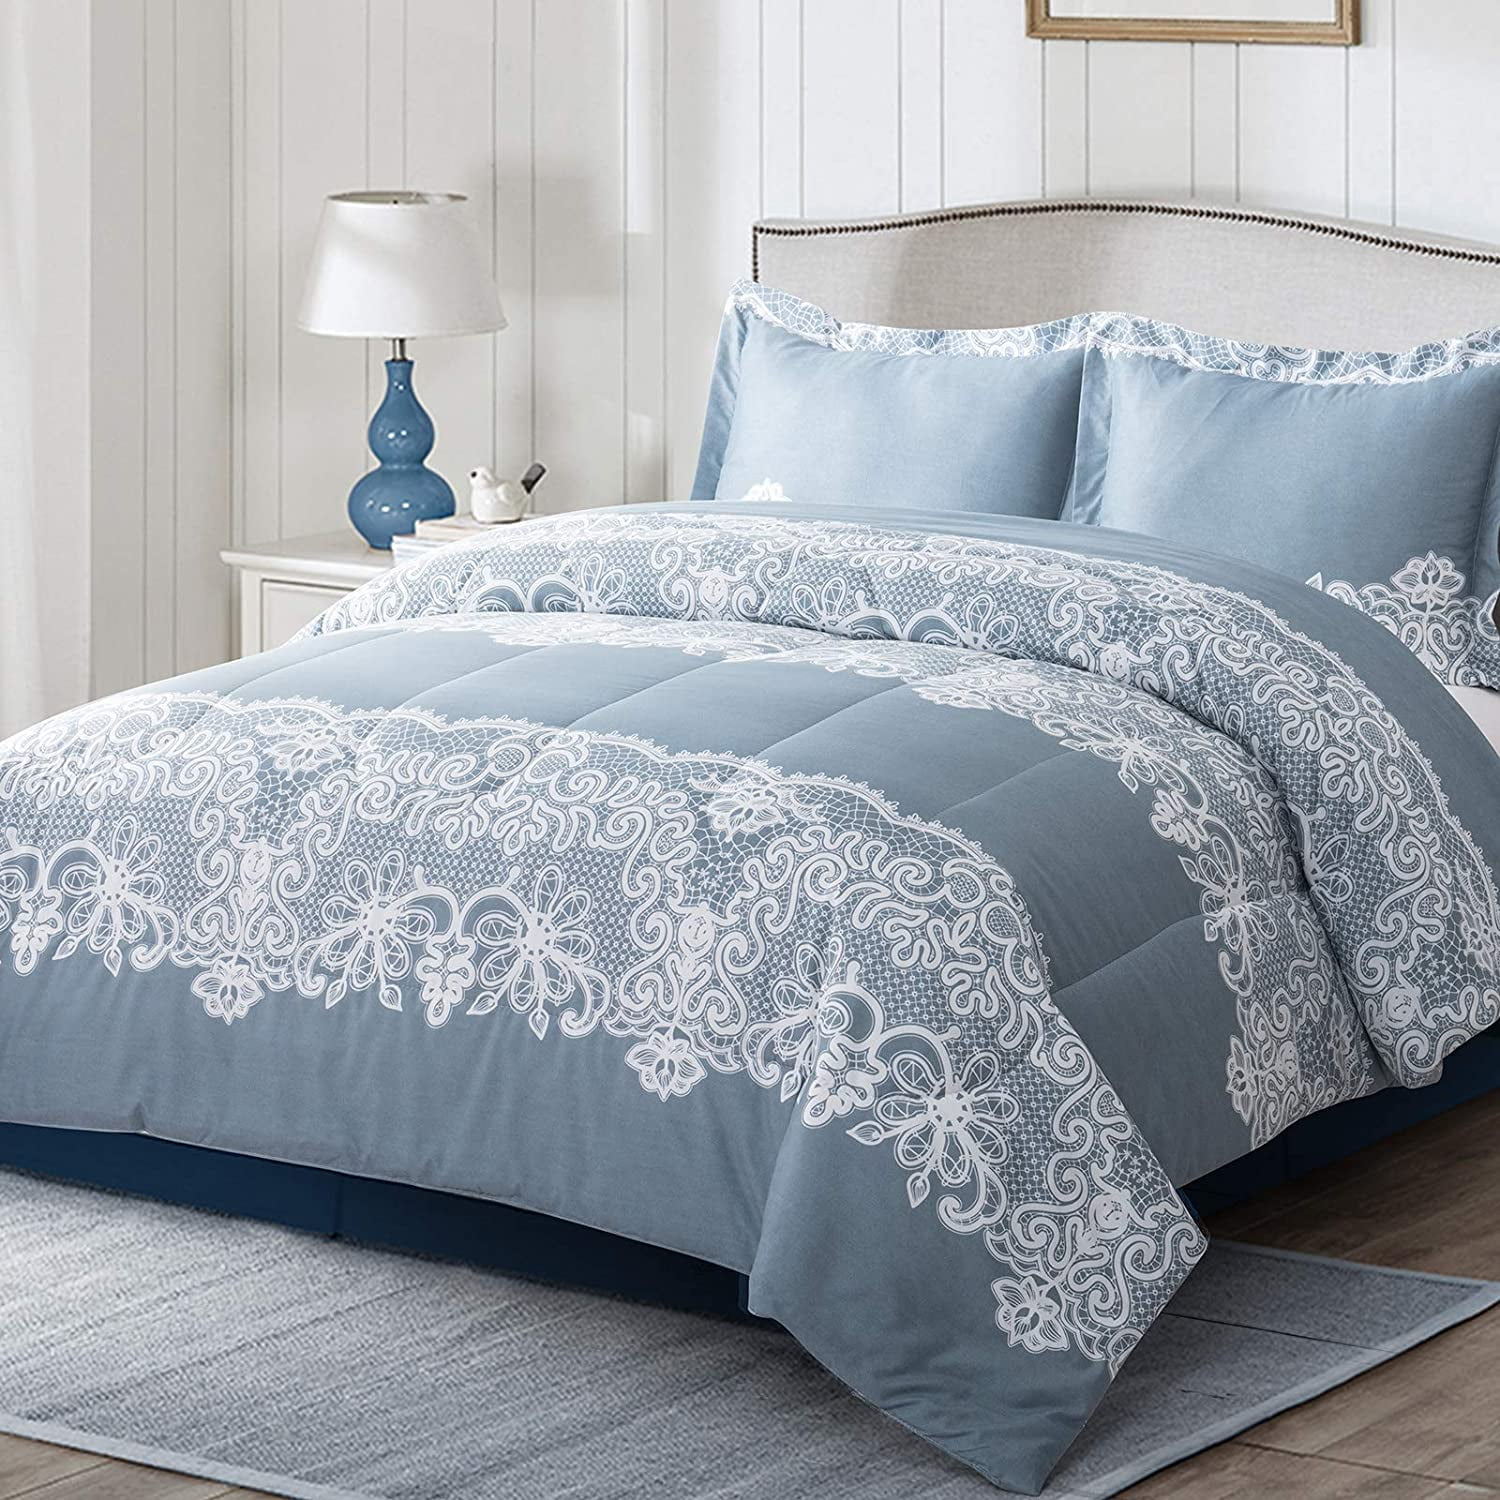 Catalpa Blossoms 100% Cotton Bedding Set:1 Duvet Cover 2 Pillow Shams Queen/King 